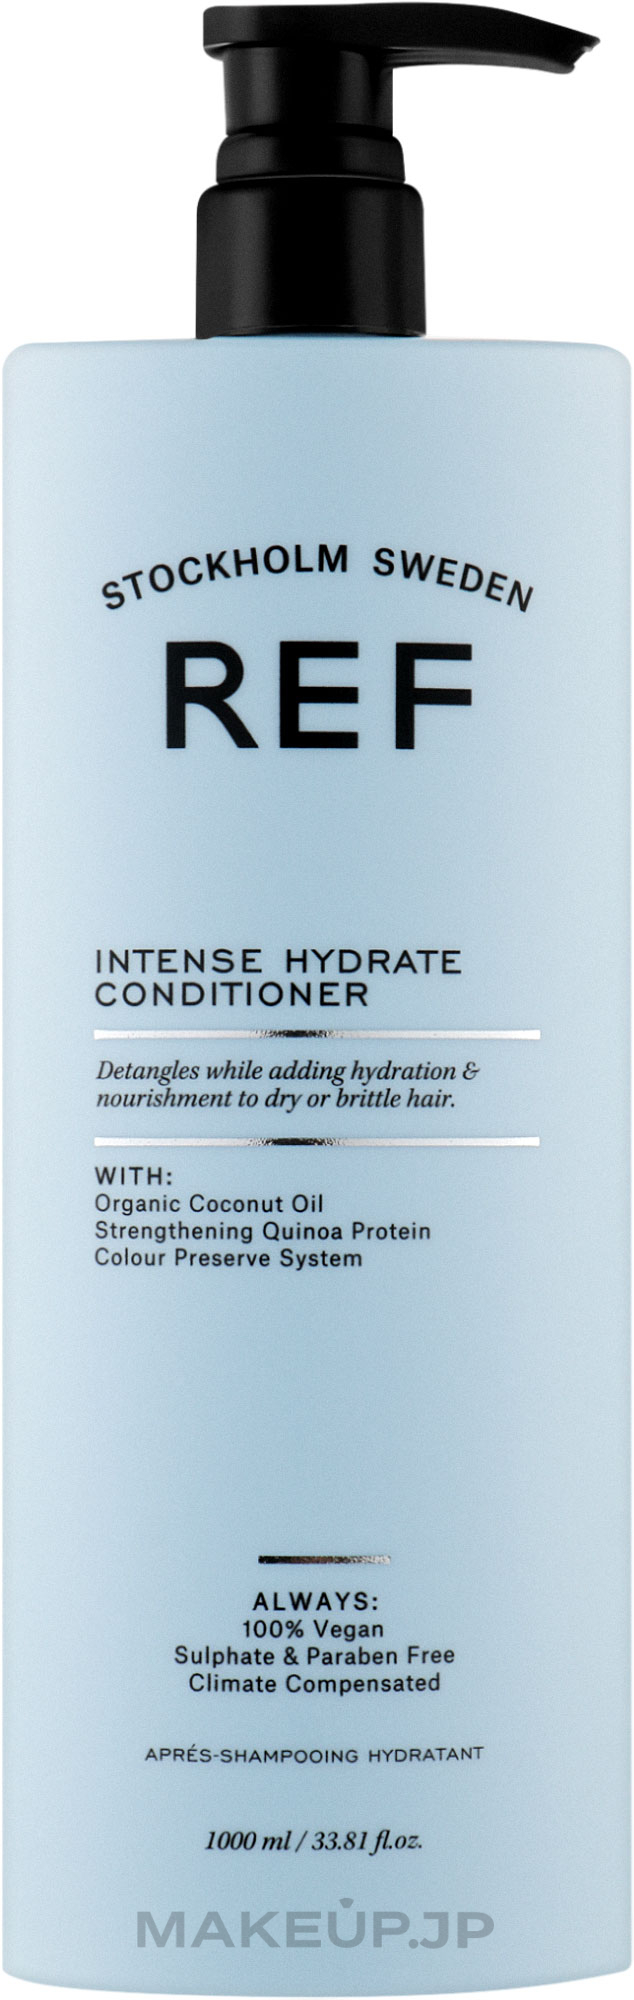 Moisturizing Conditioner - REF Intense Hydrate Conditioner — photo 1000 ml